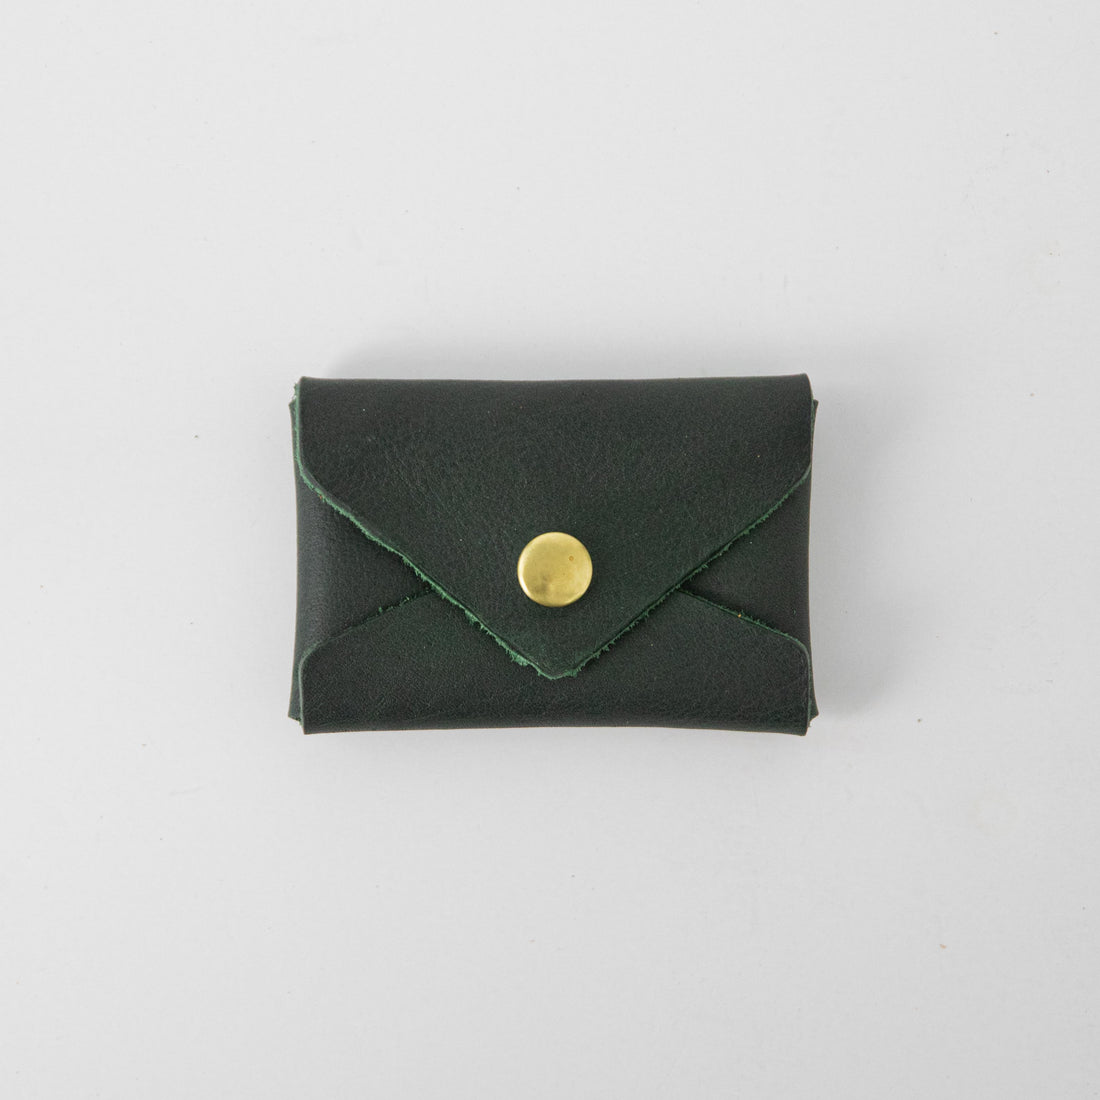 Green Kodiak Card Envelope- card holder wallet - leather wallet made in America at KMM &amp; Co.